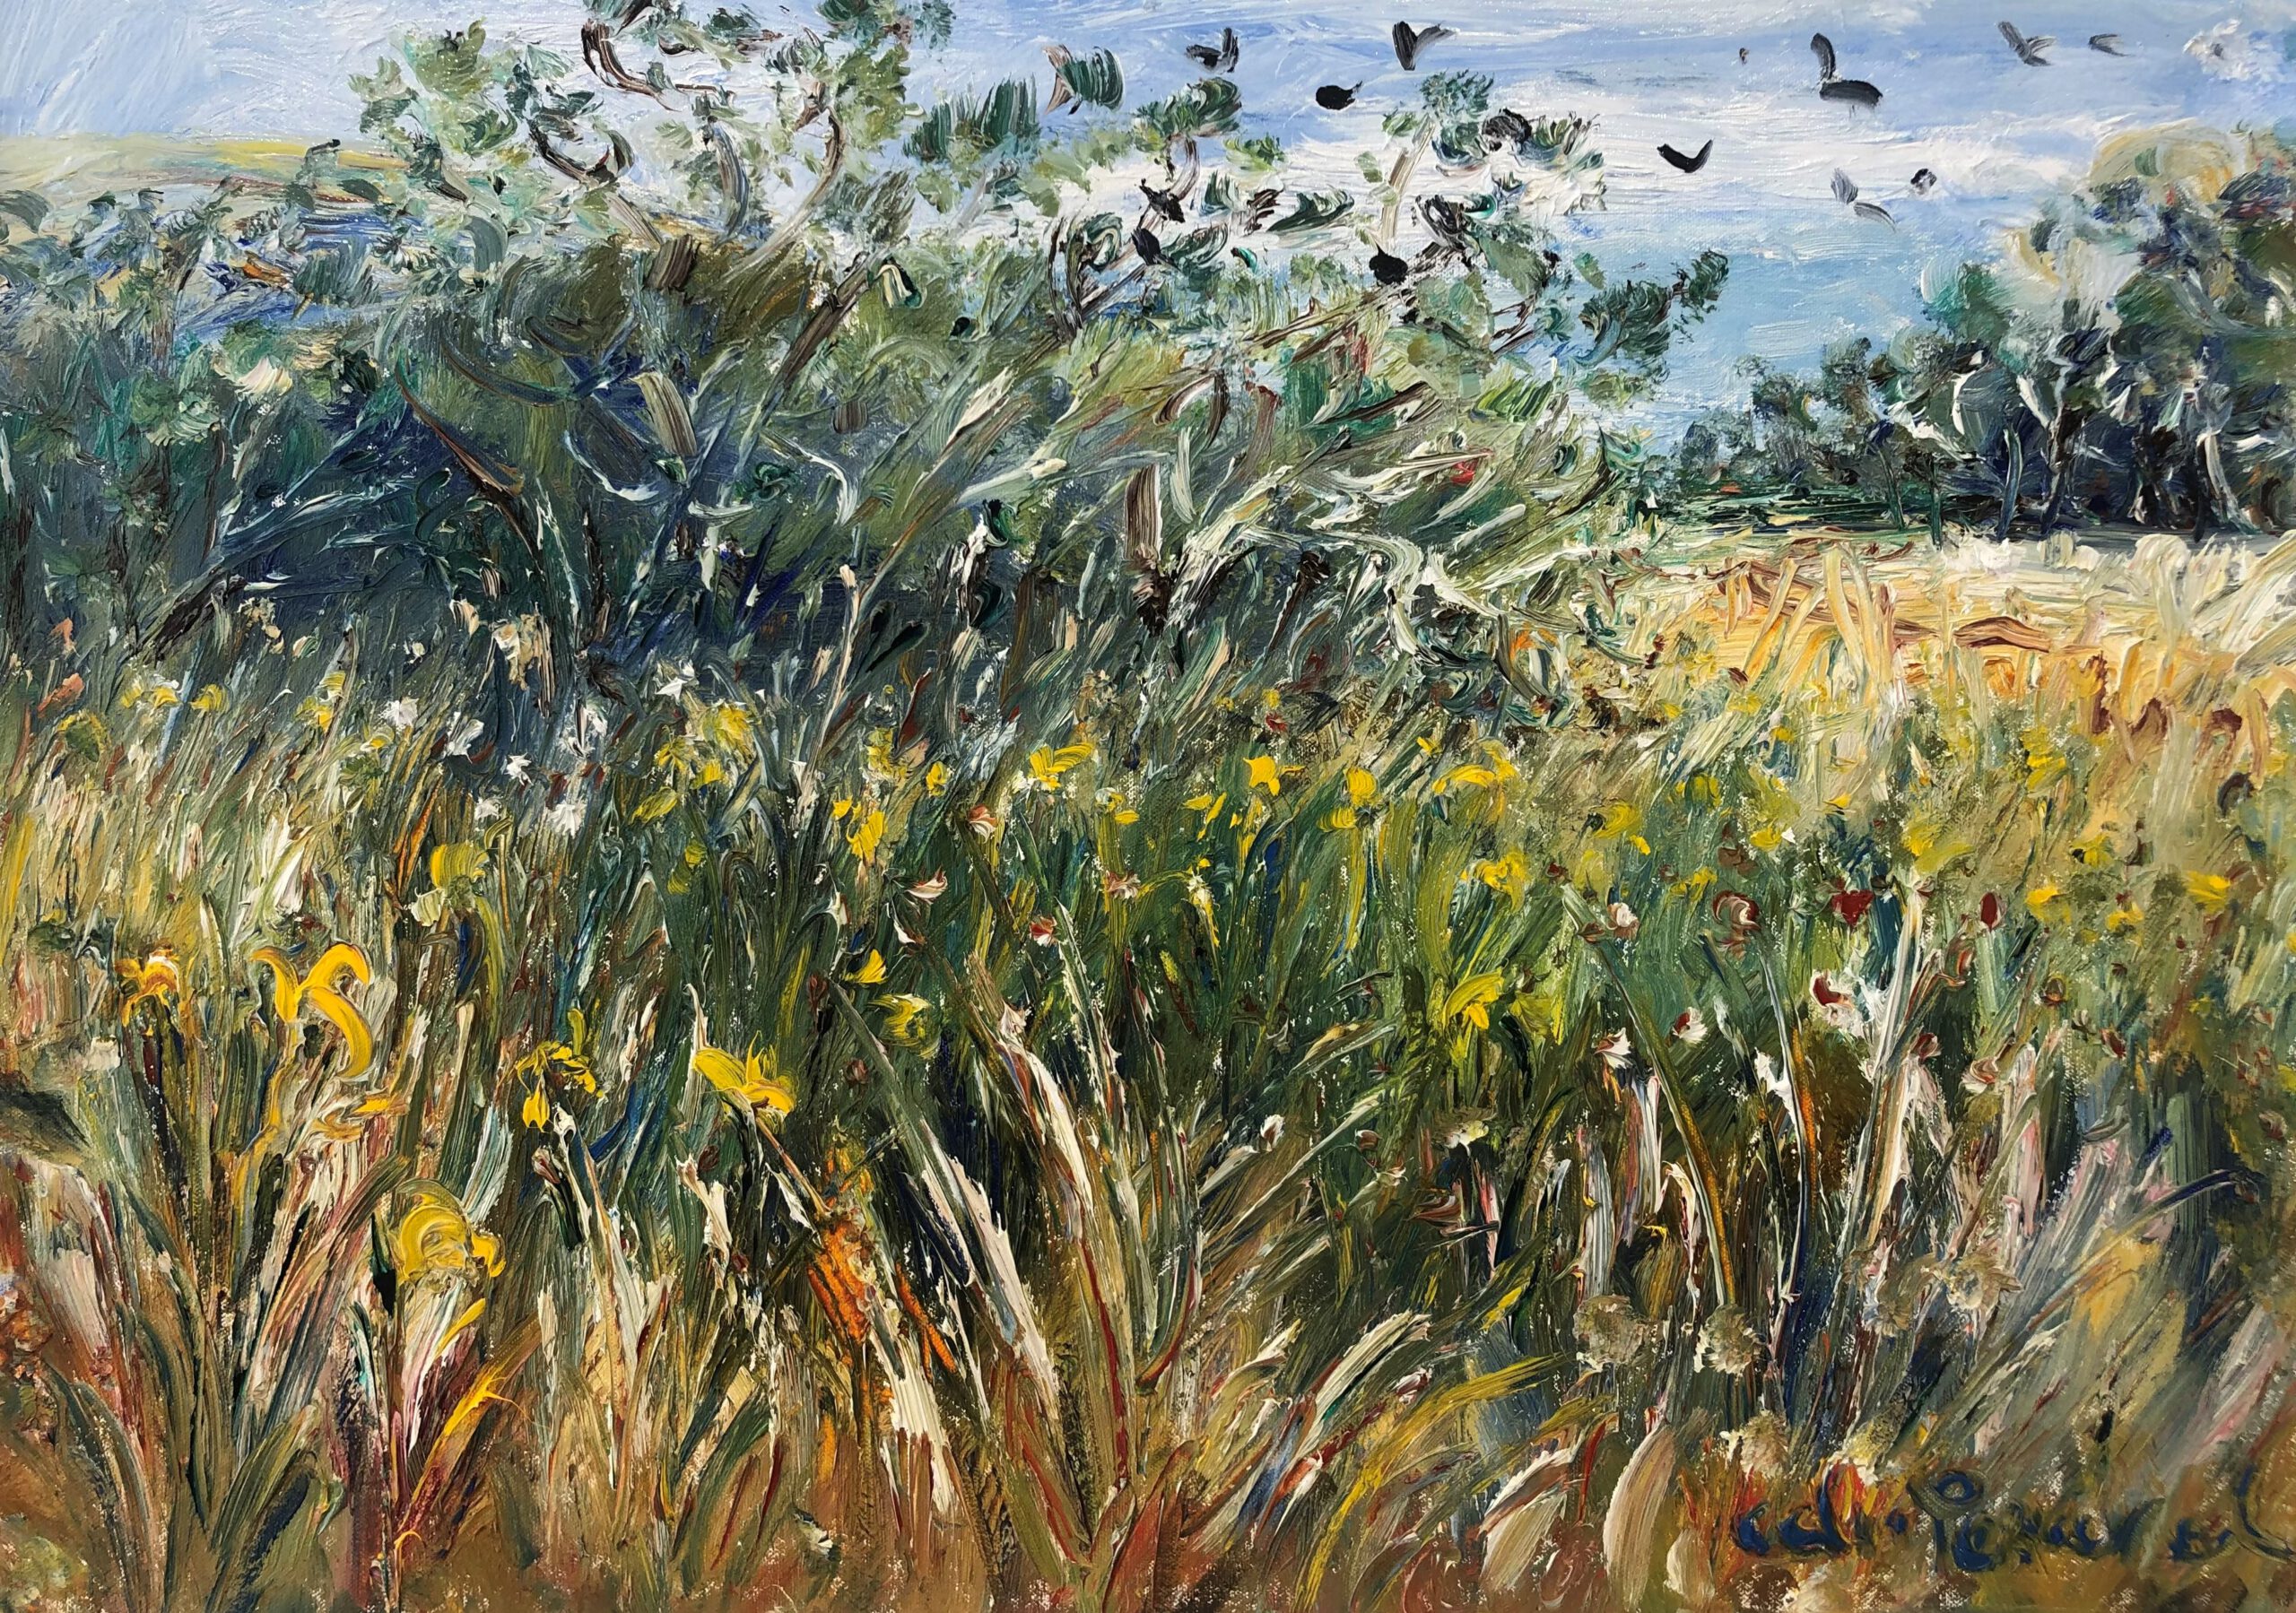 Perceval_Wild Iris in the Long Grass (West Coast, Ireland), oil on canvas, 70 x 50cm_master